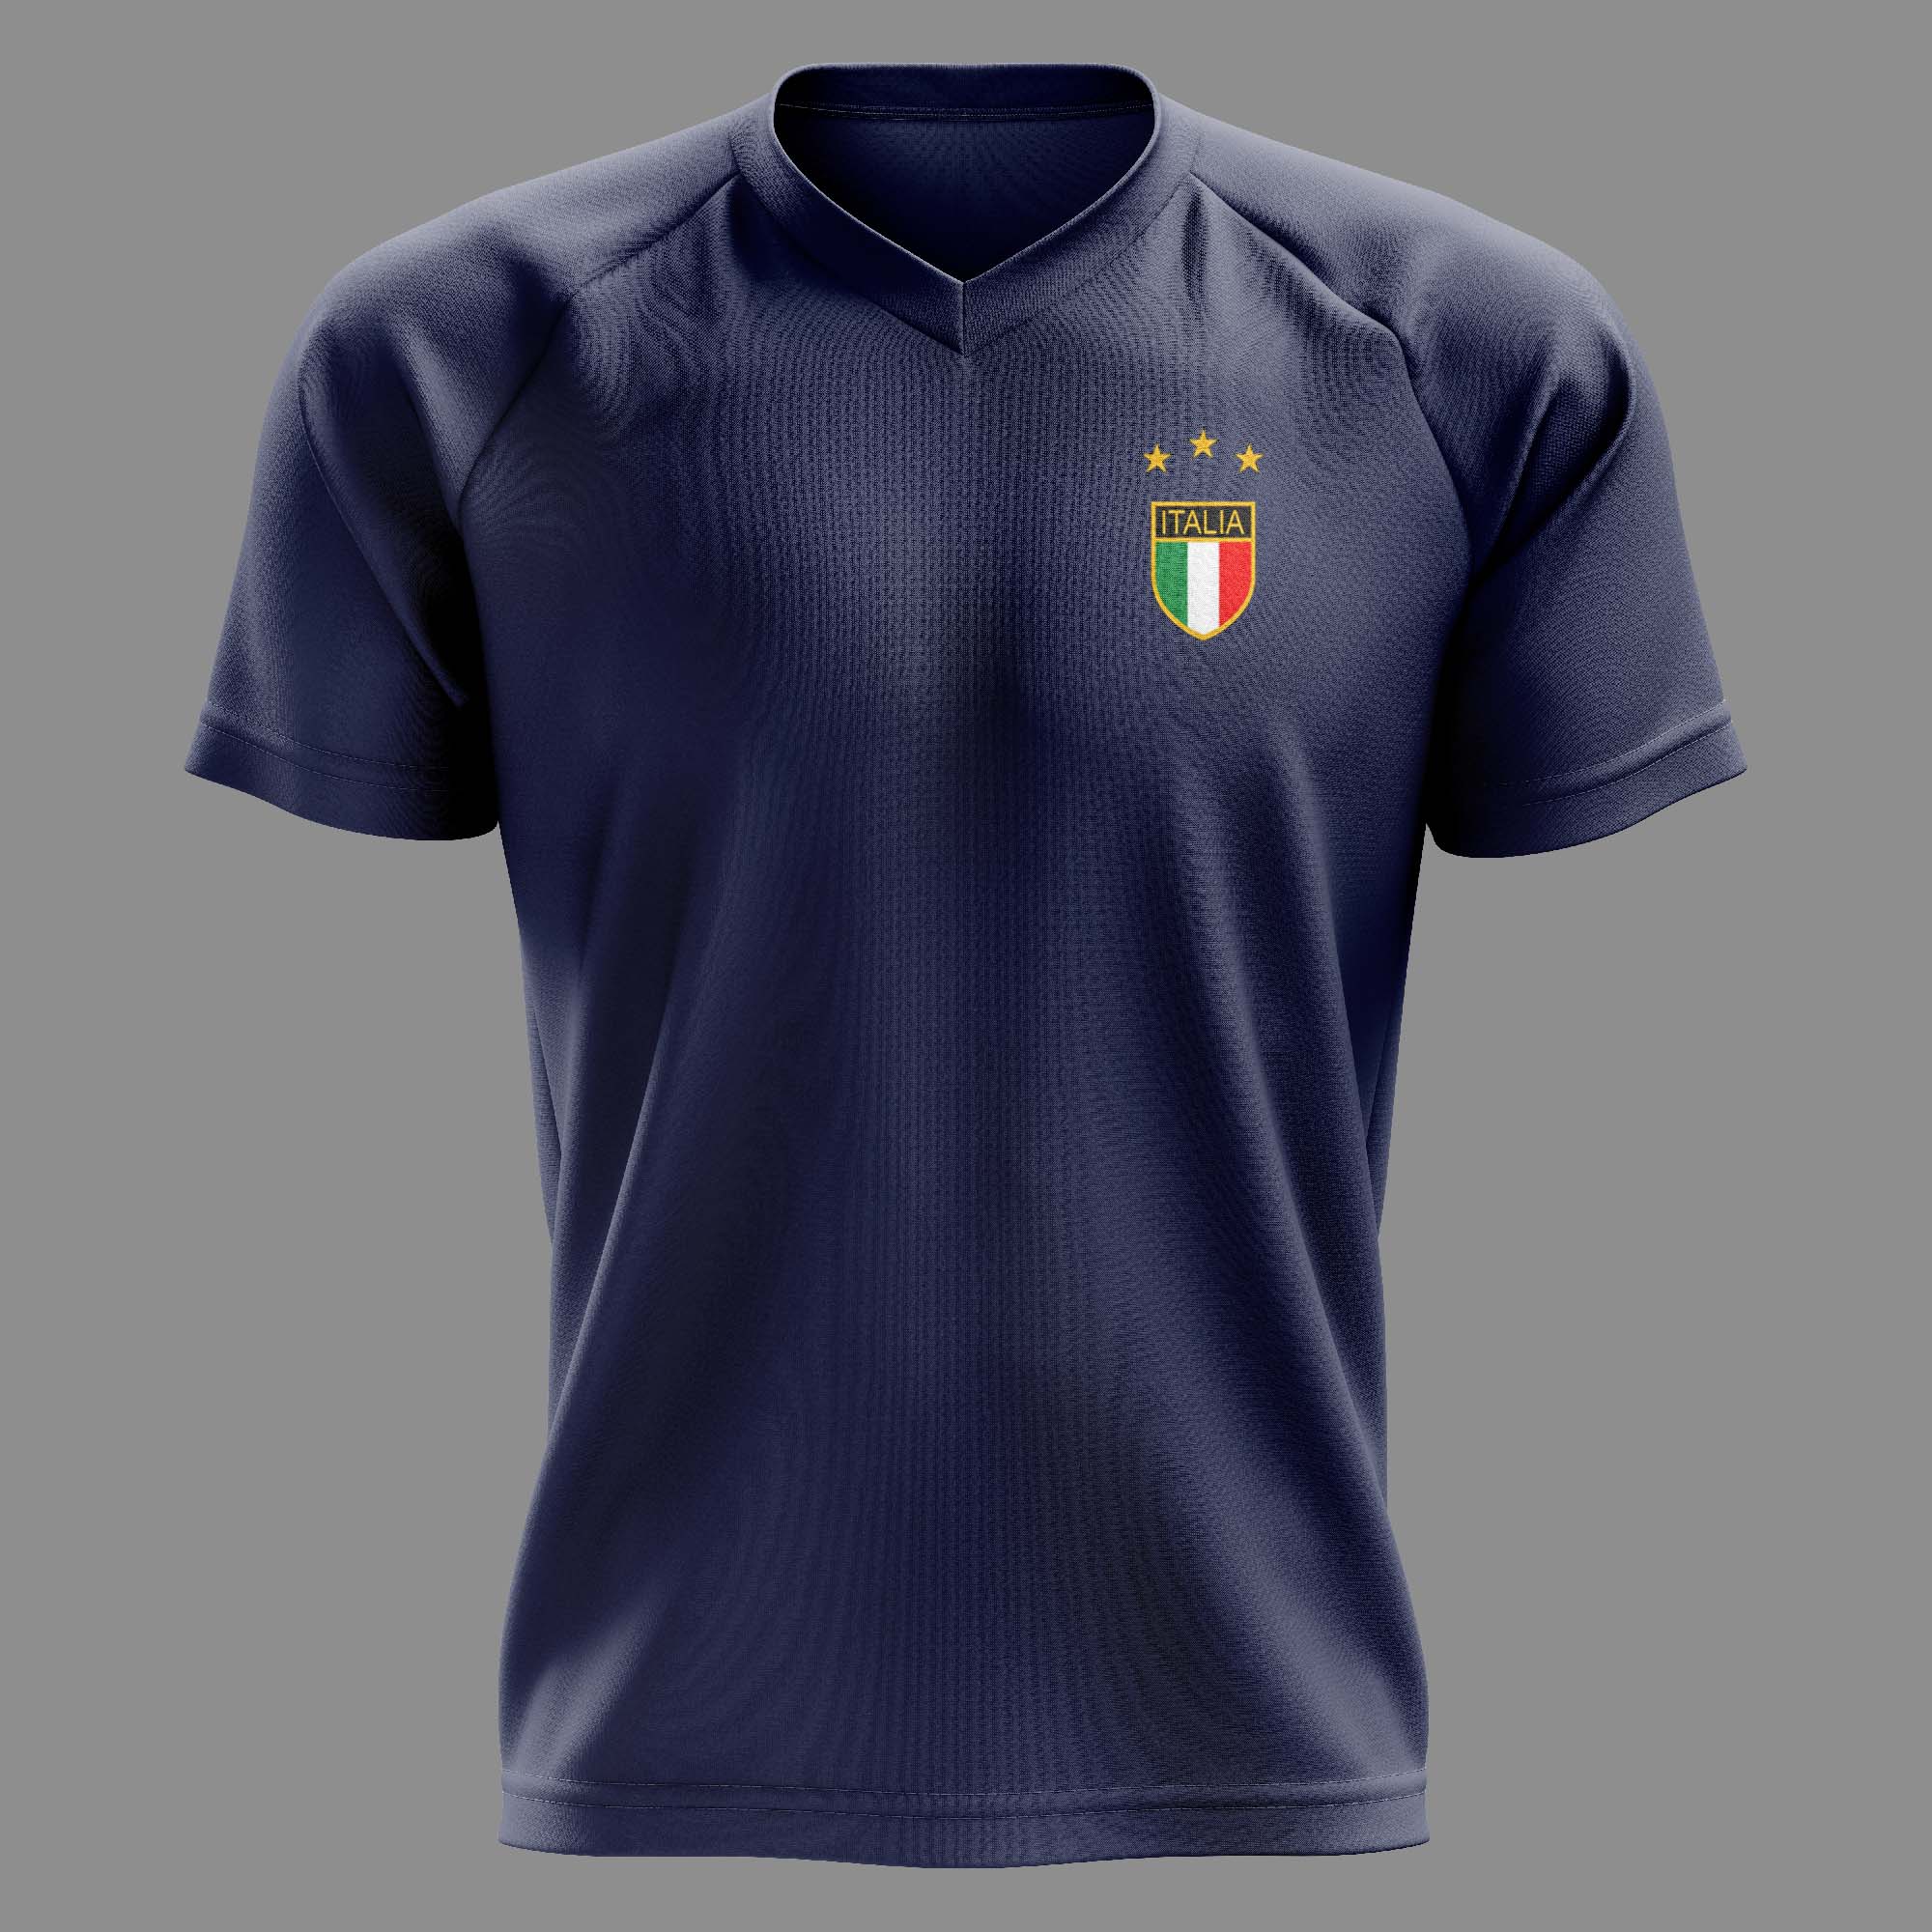 Italy 2004 Third Kit Retro Shirt PT57012